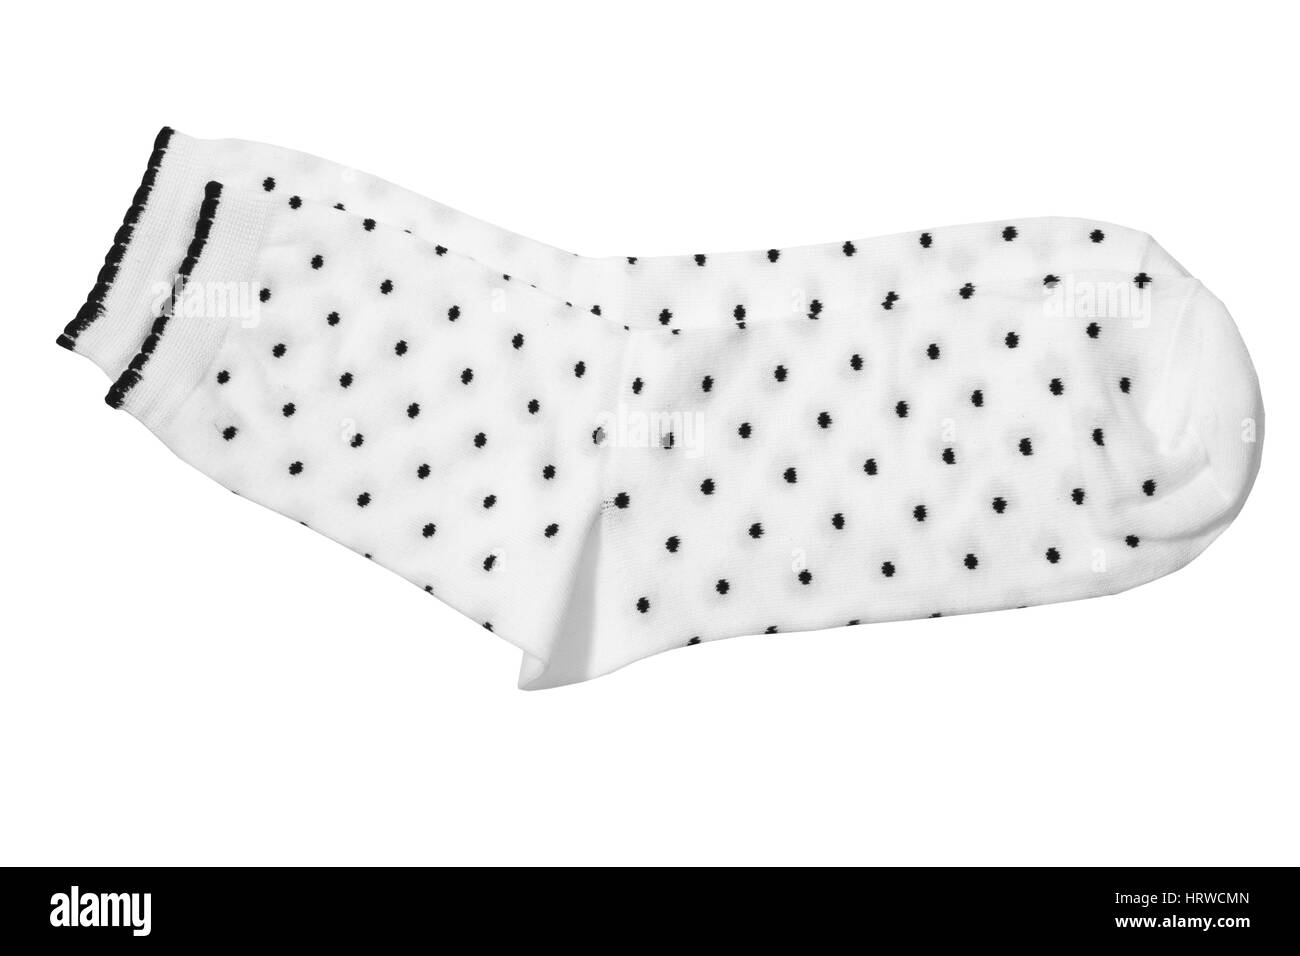 White Socks Black and White Stock Photos & Images - Alamy